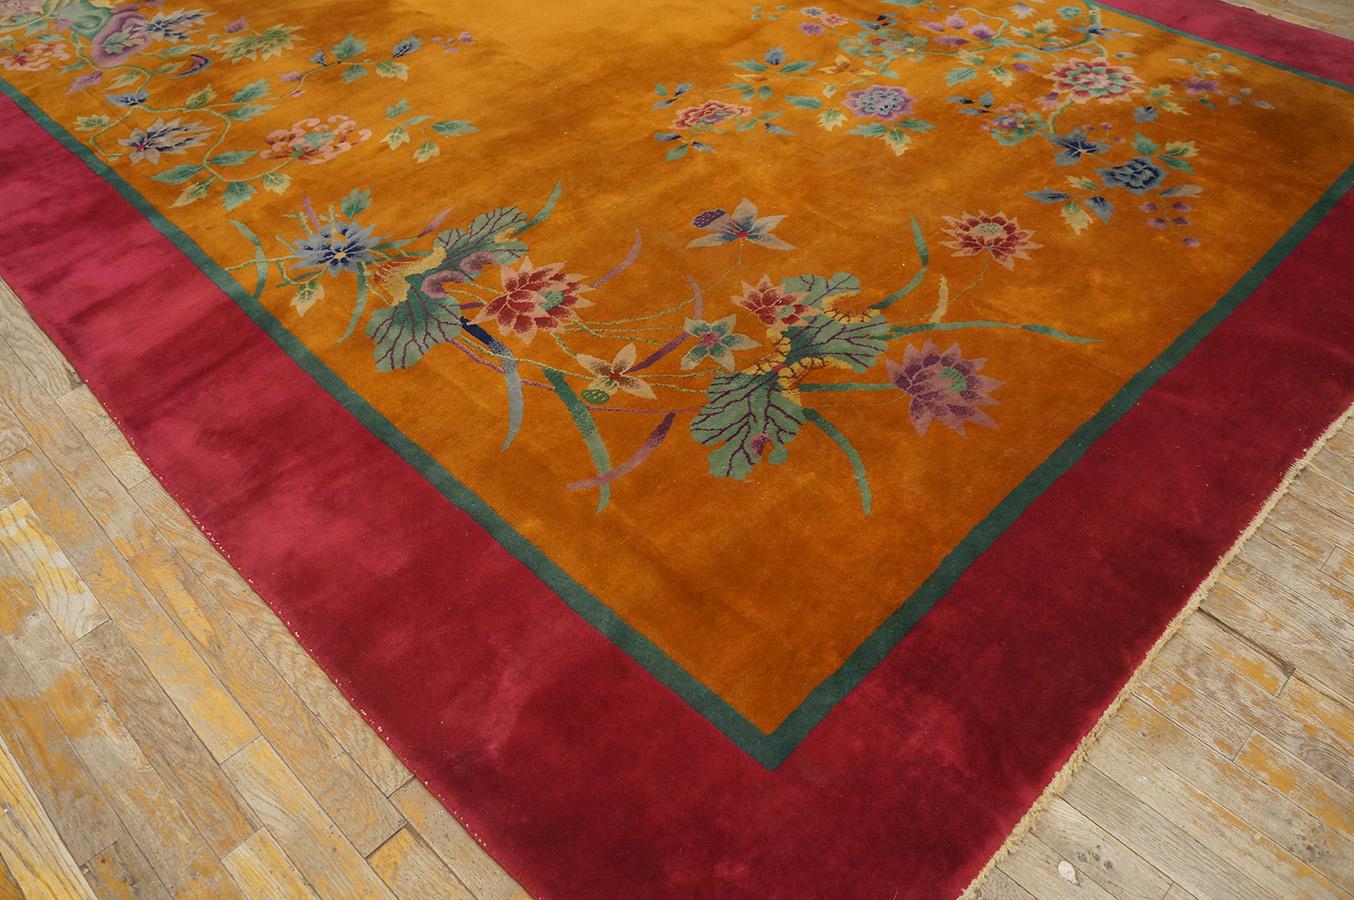 1920s Chinese Art Deco Carpet ( 8'8'' x 11'4'' - 265 x 345 )
Floral design with burnt orange field & fuchsia color border.